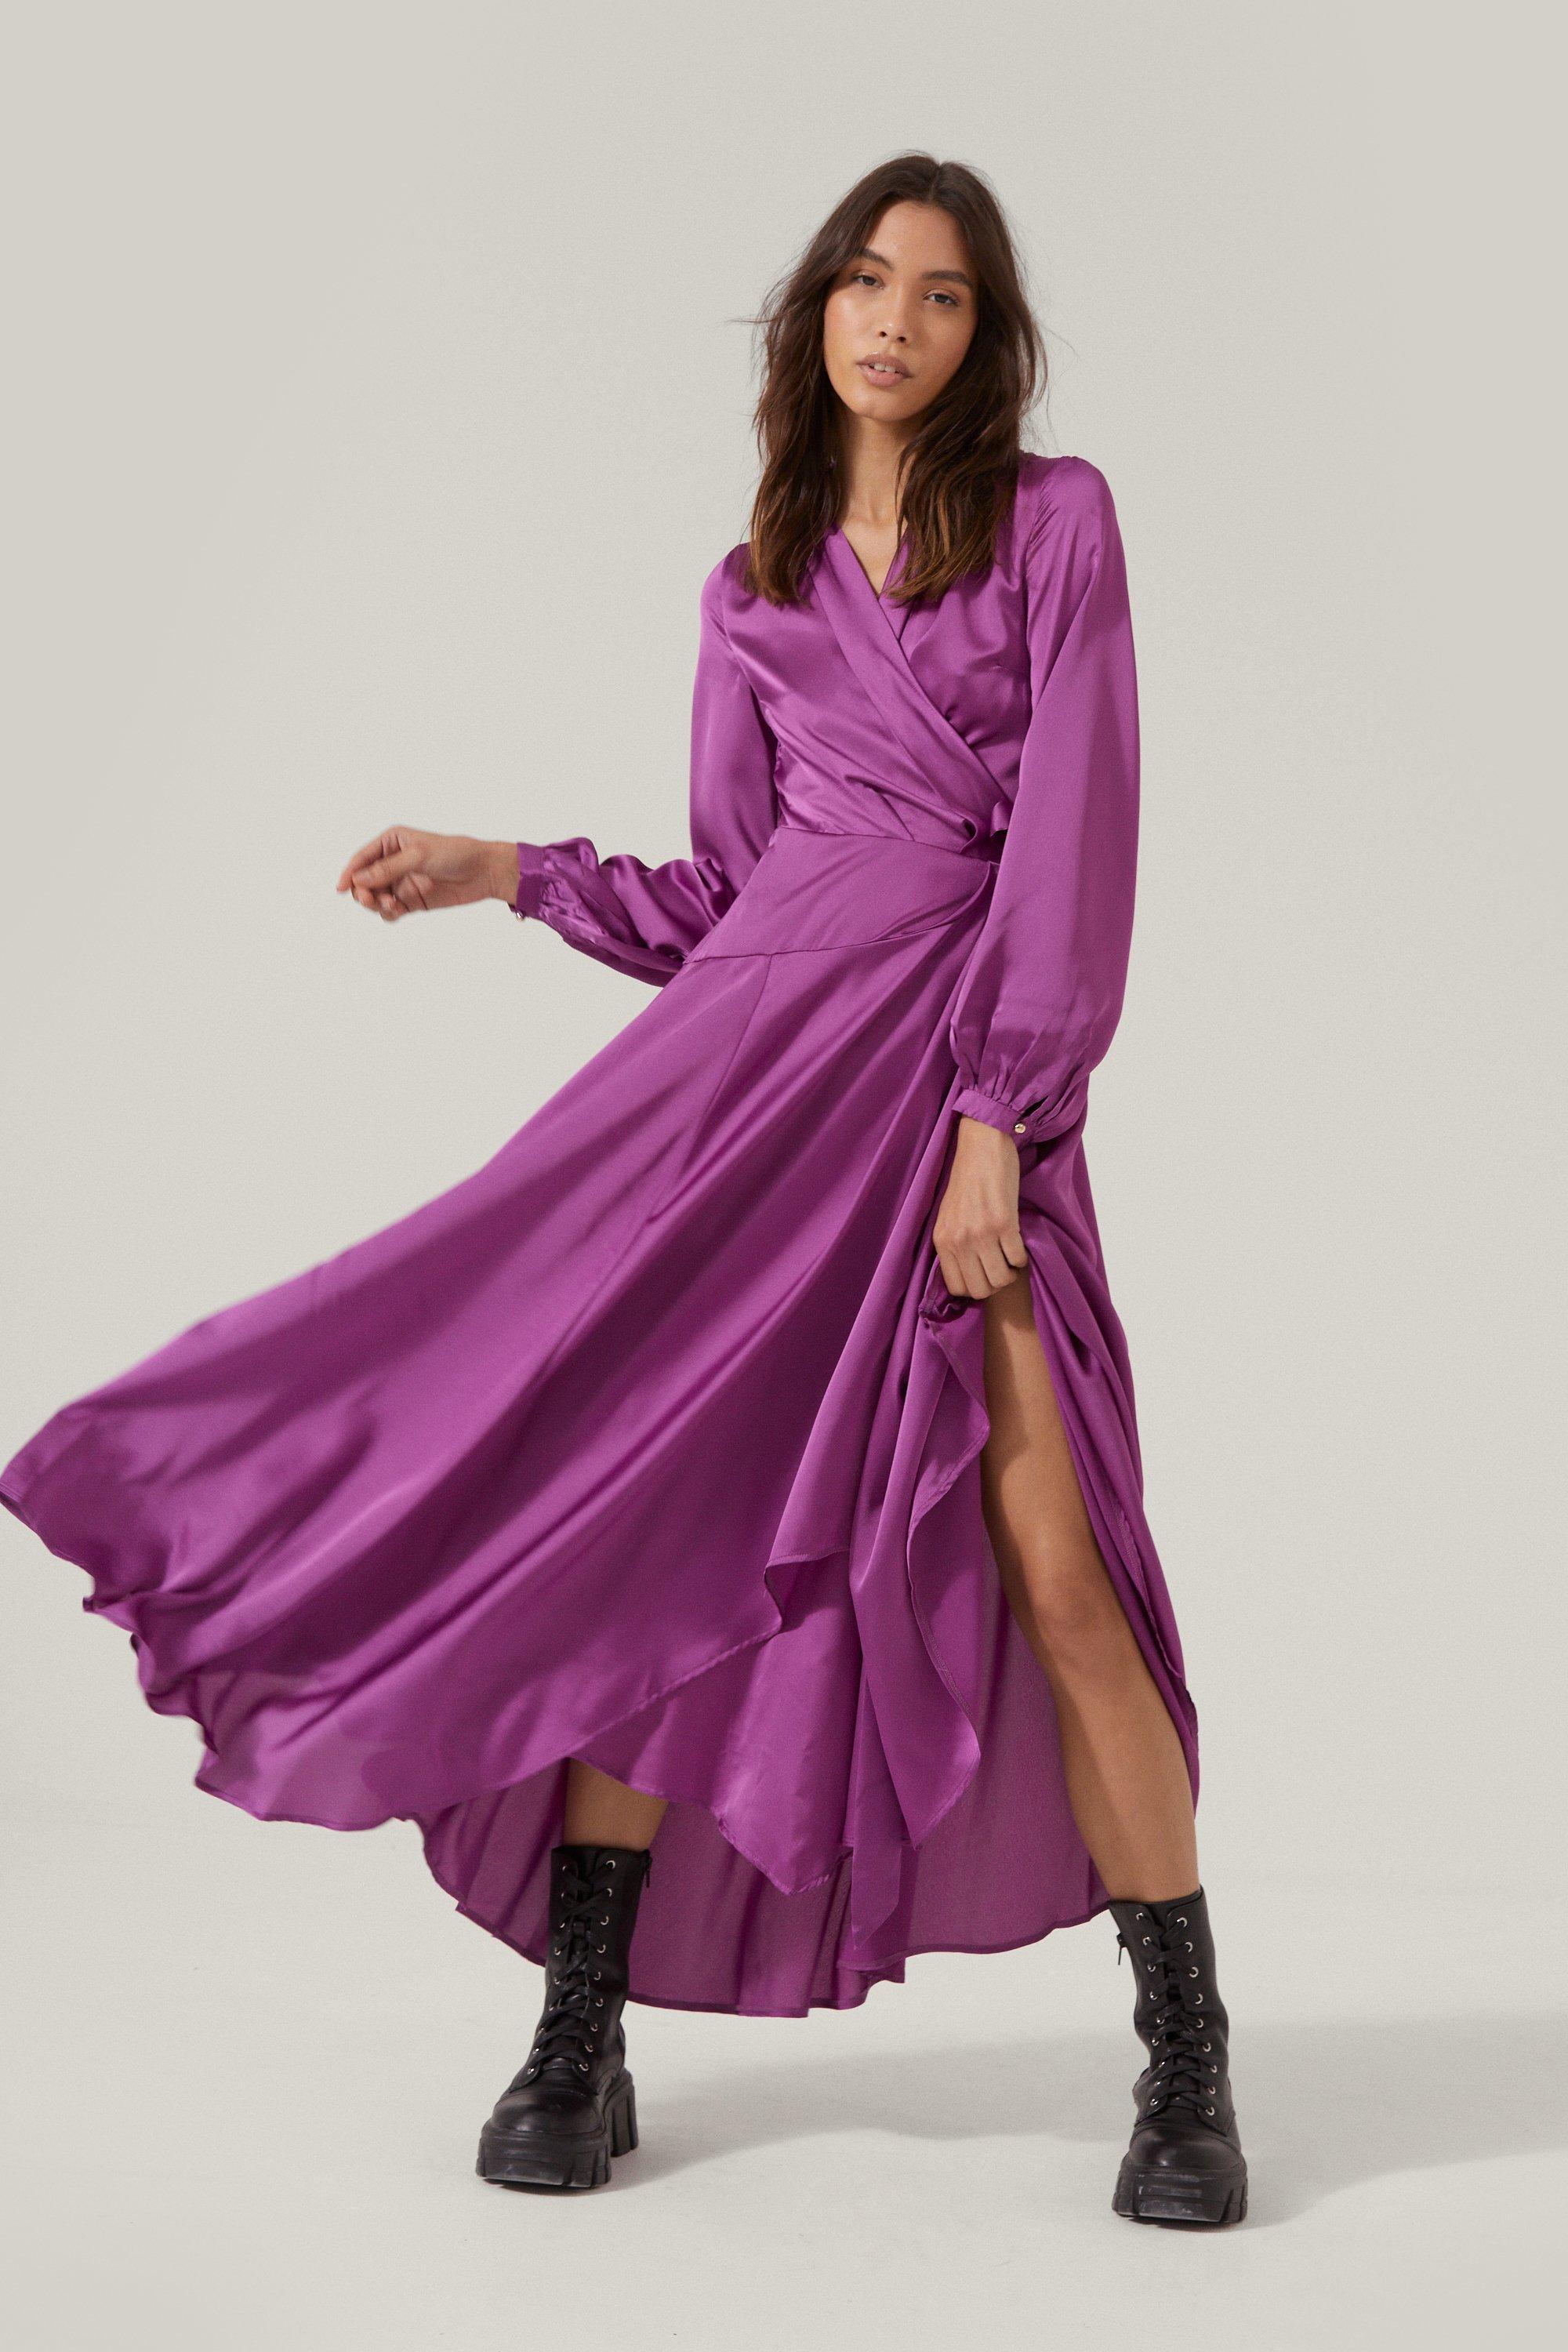 wrap purple dress Big sale - OFF 64%